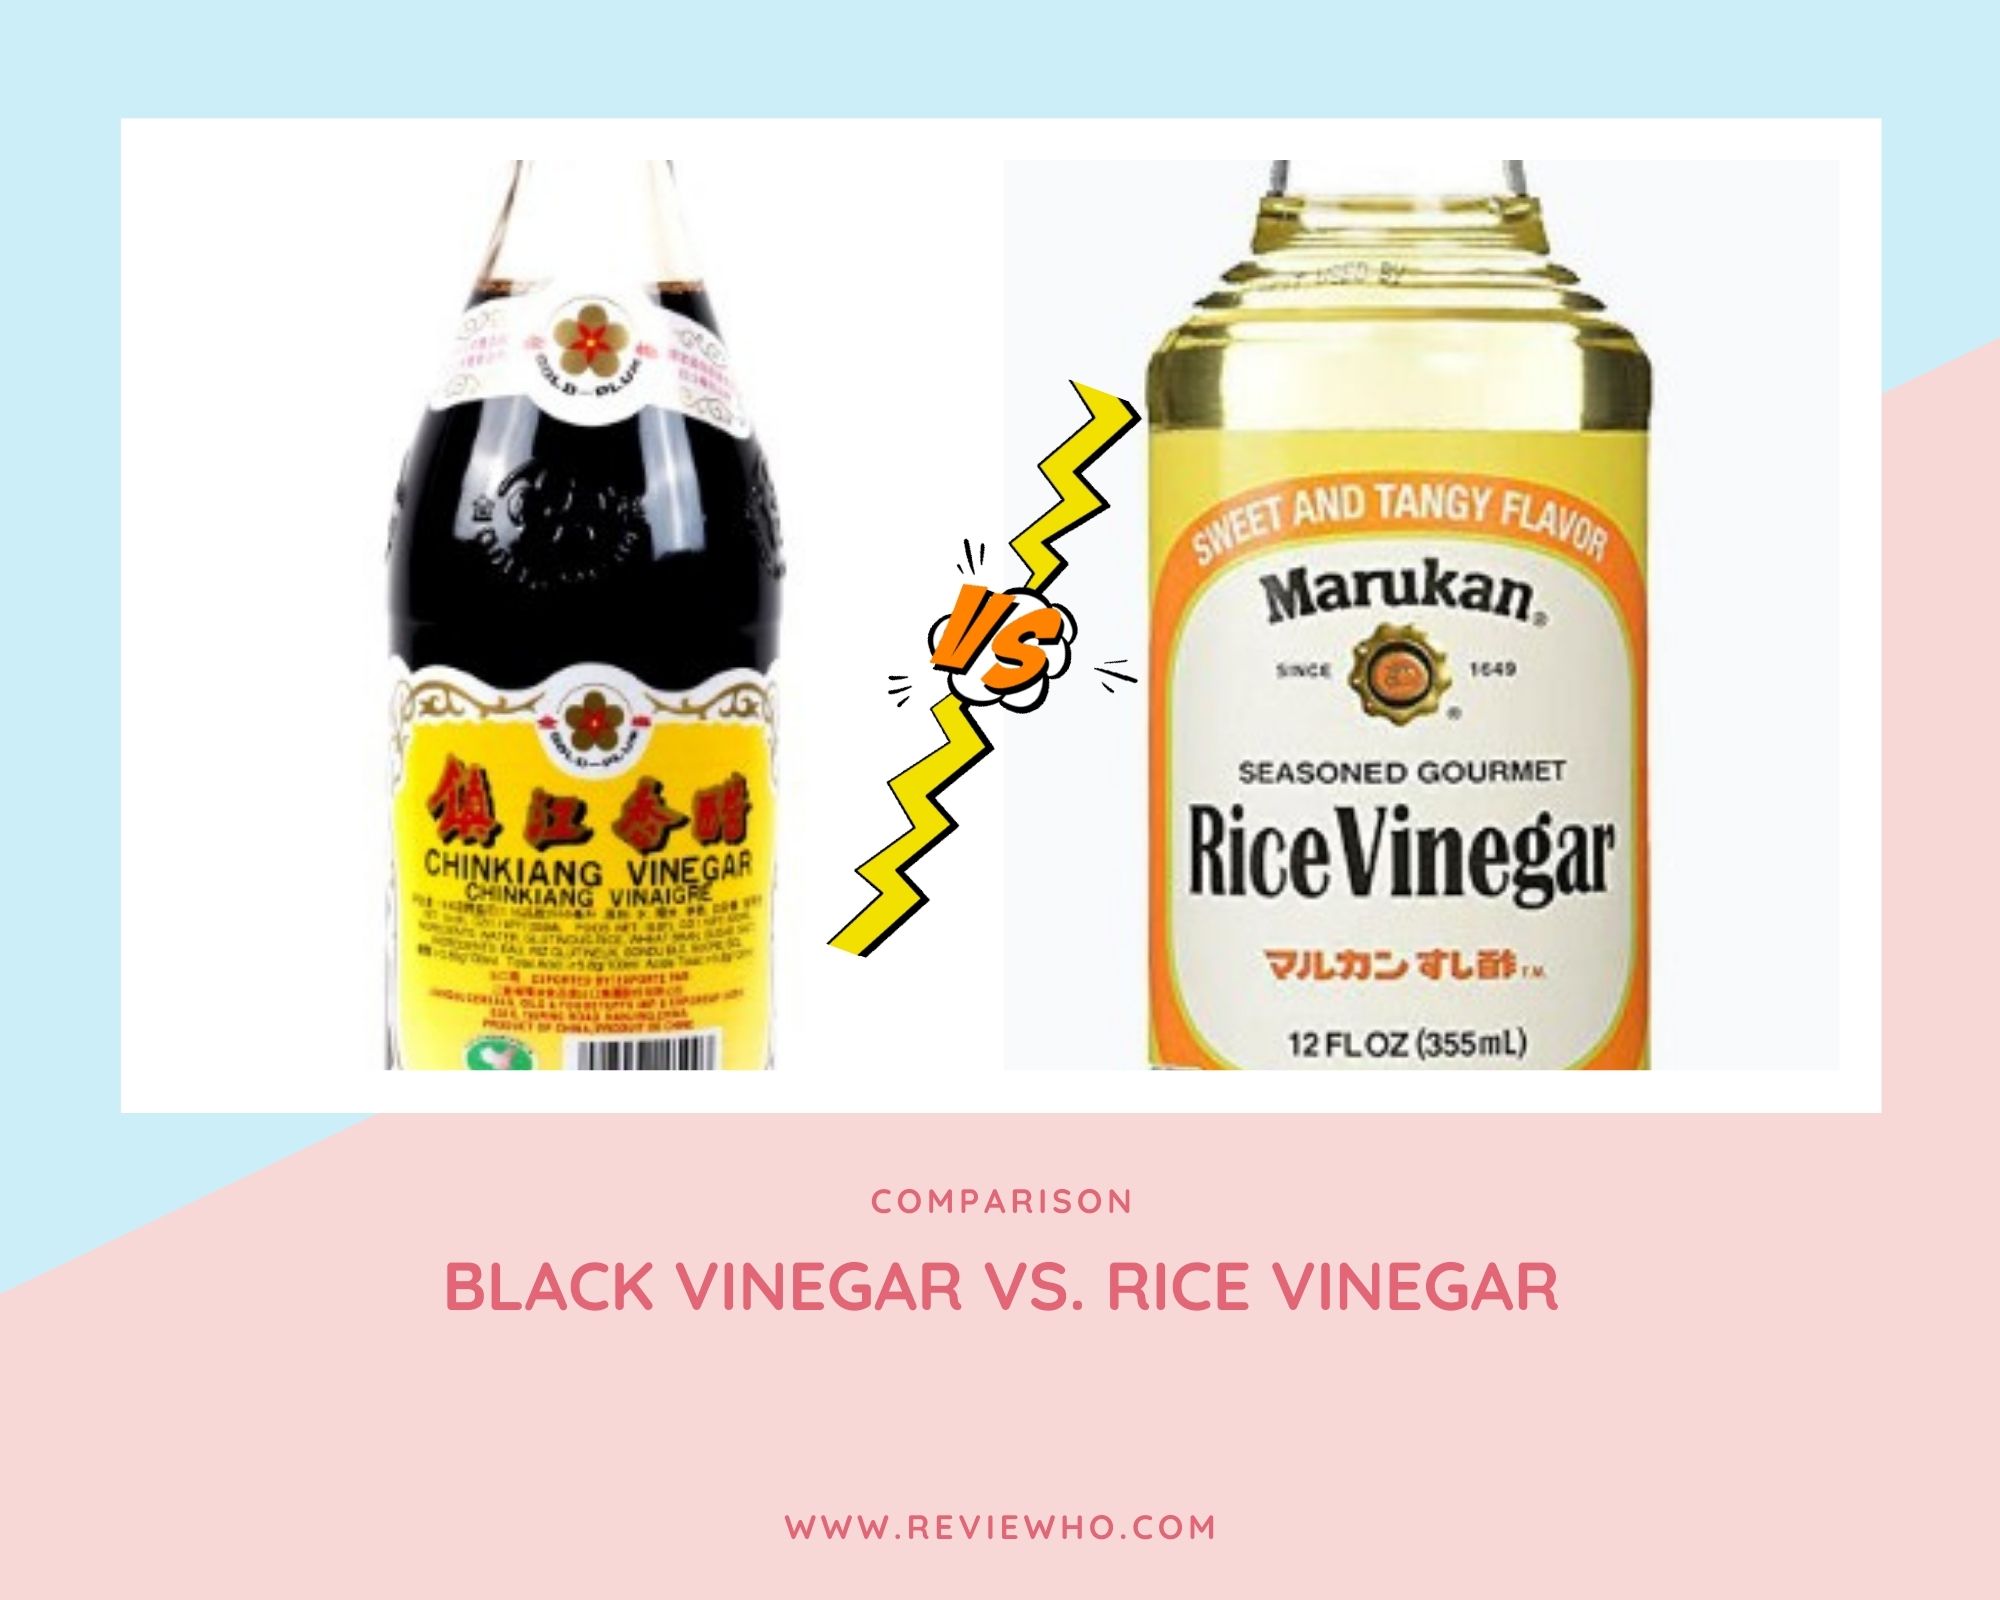 Difference between Black Vinegar and Rice Vinegar